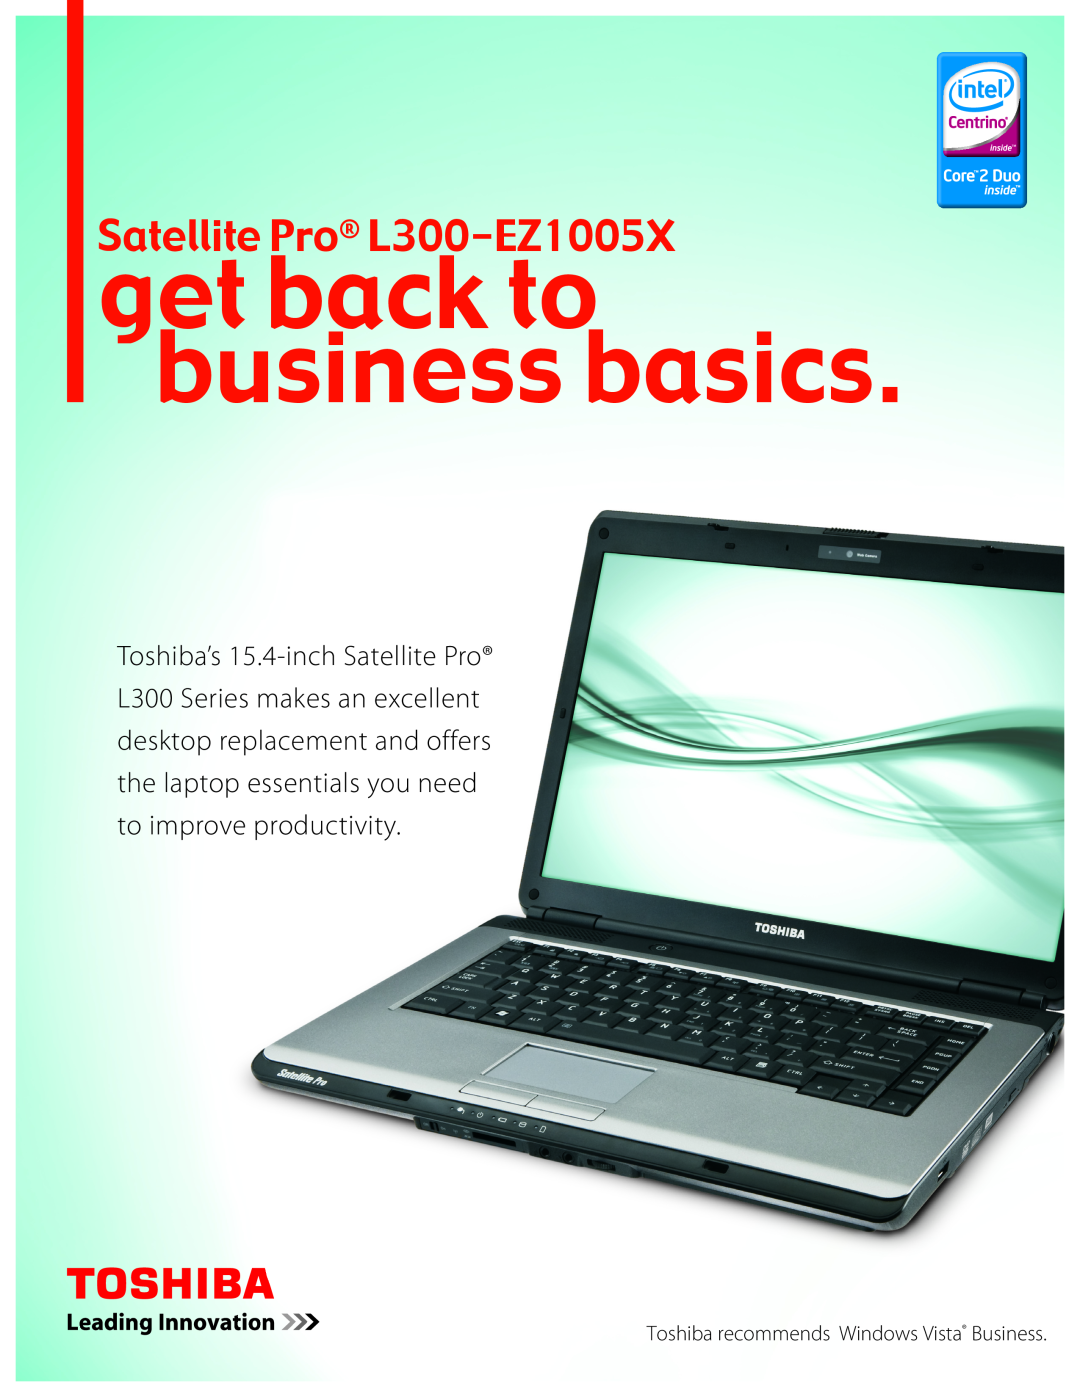 Toshiba manual get back to business basics, atellite Pro L300-EZ1005X, Toshiba recommends Windows Vista Business 